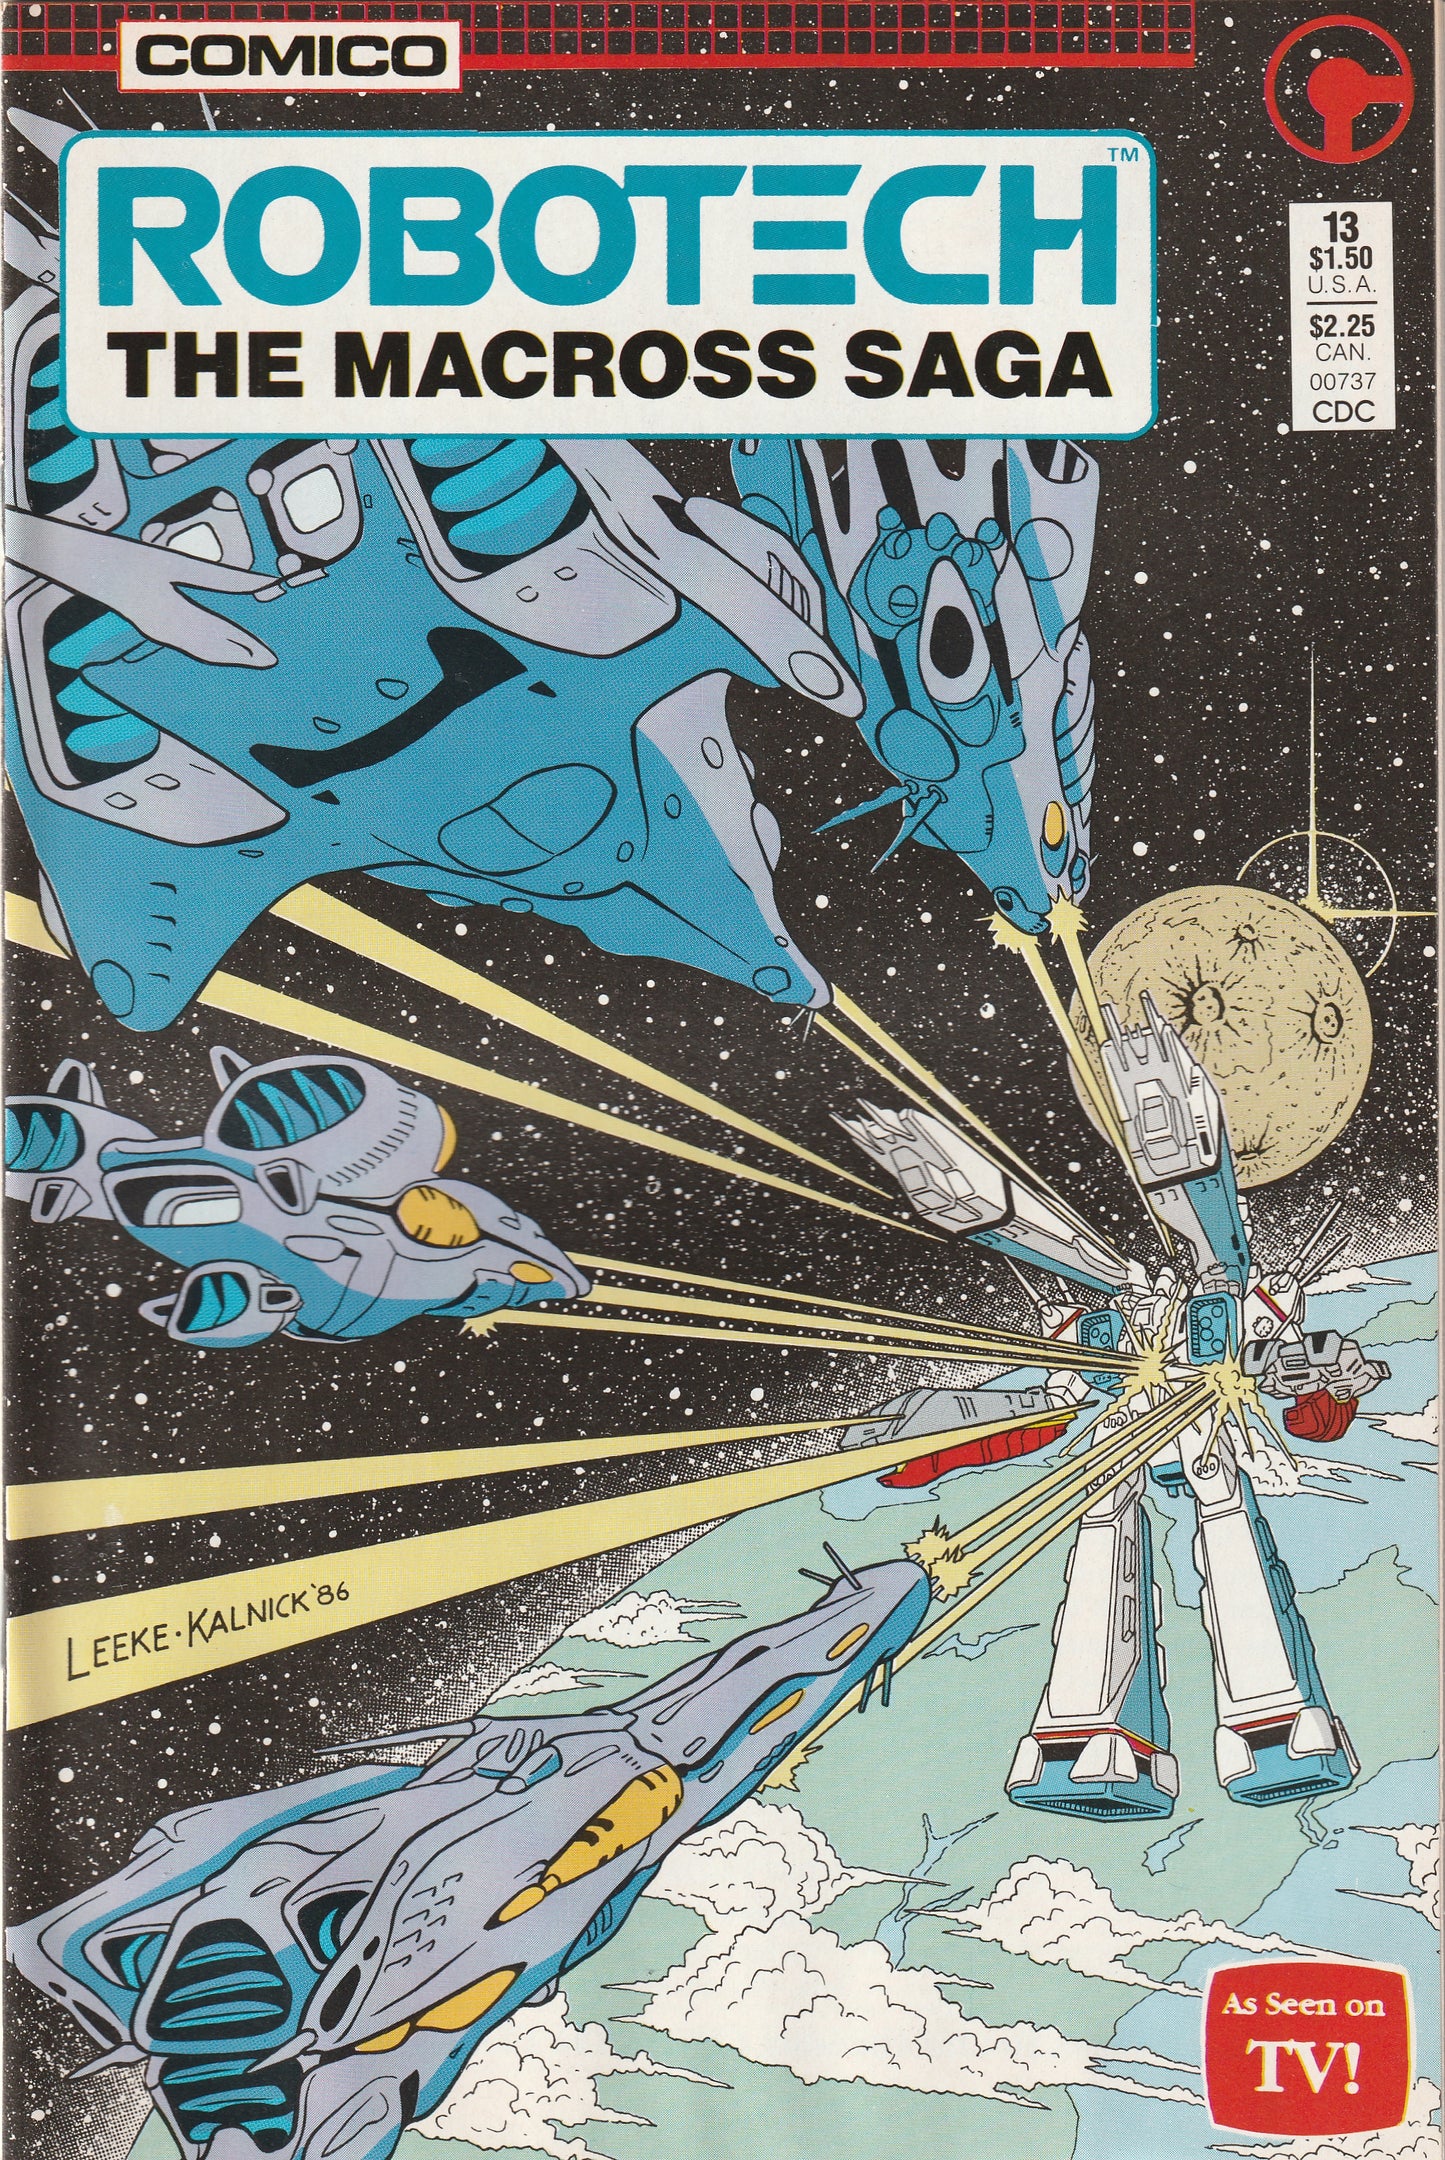 Robotech: The Macross Saga #13 (1986)